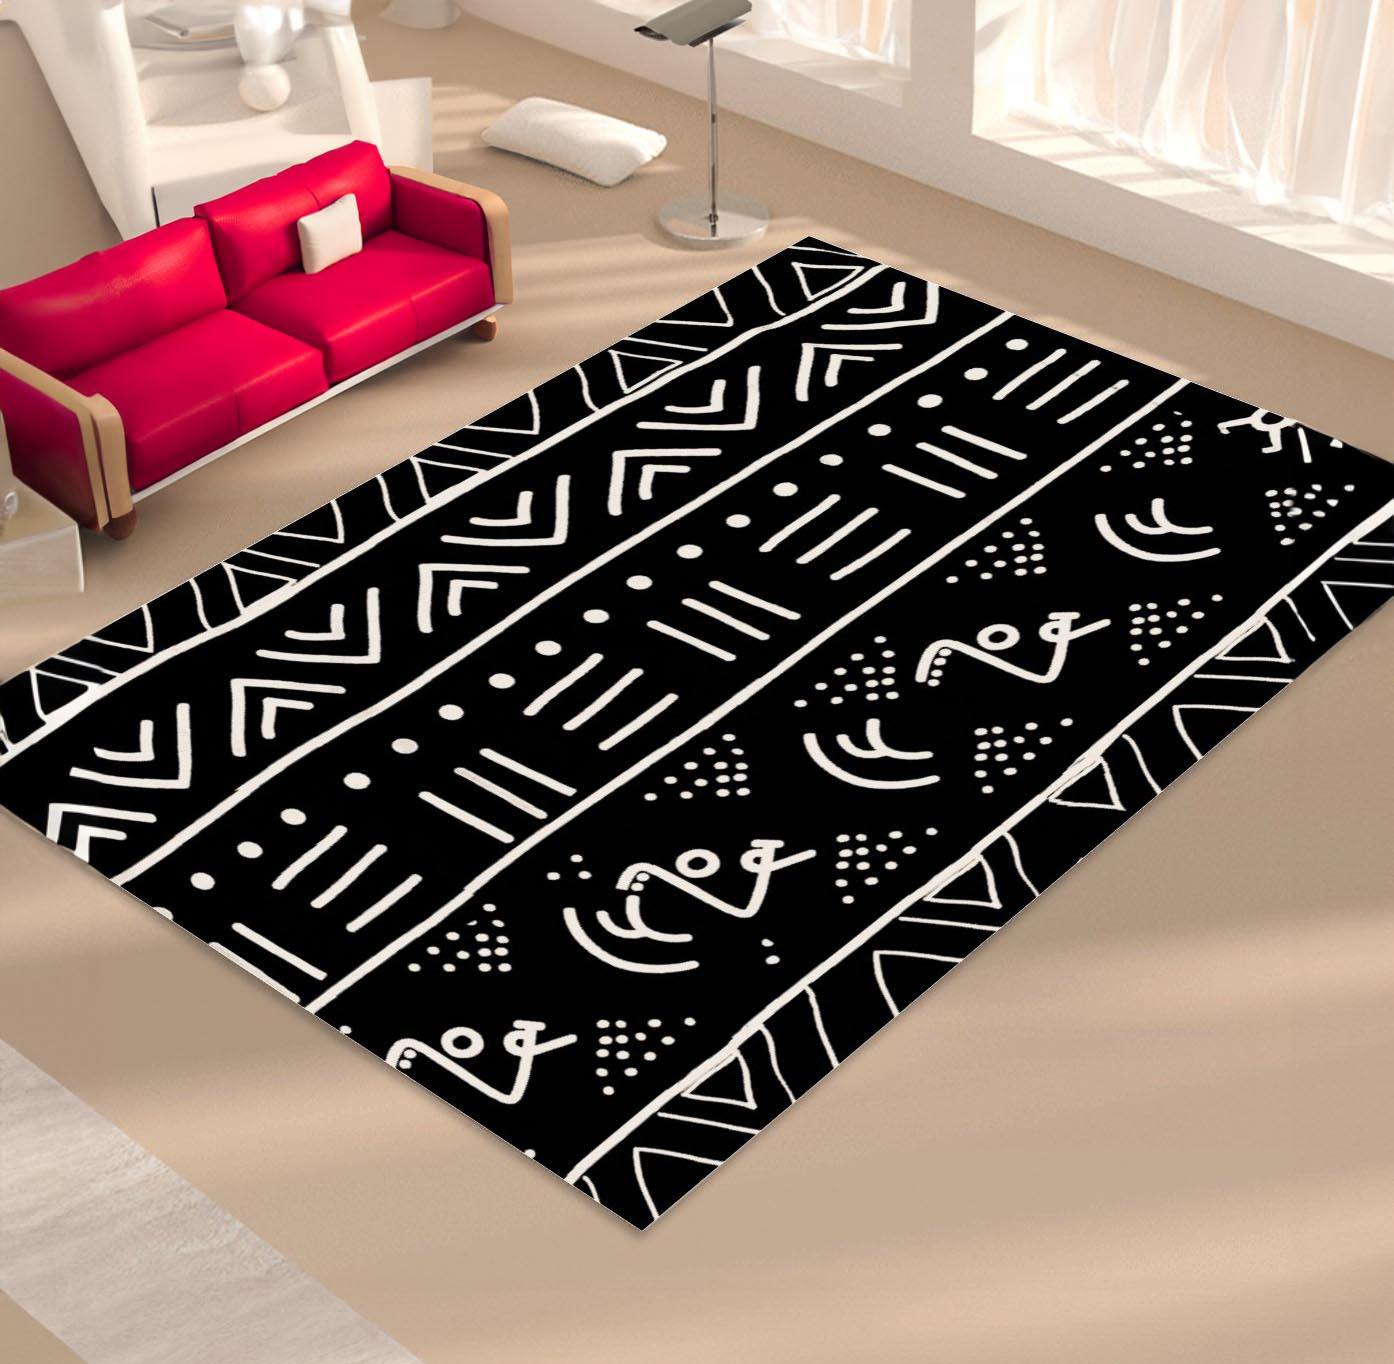 Tribal African Rug - Black & White Mudcloth Carpet